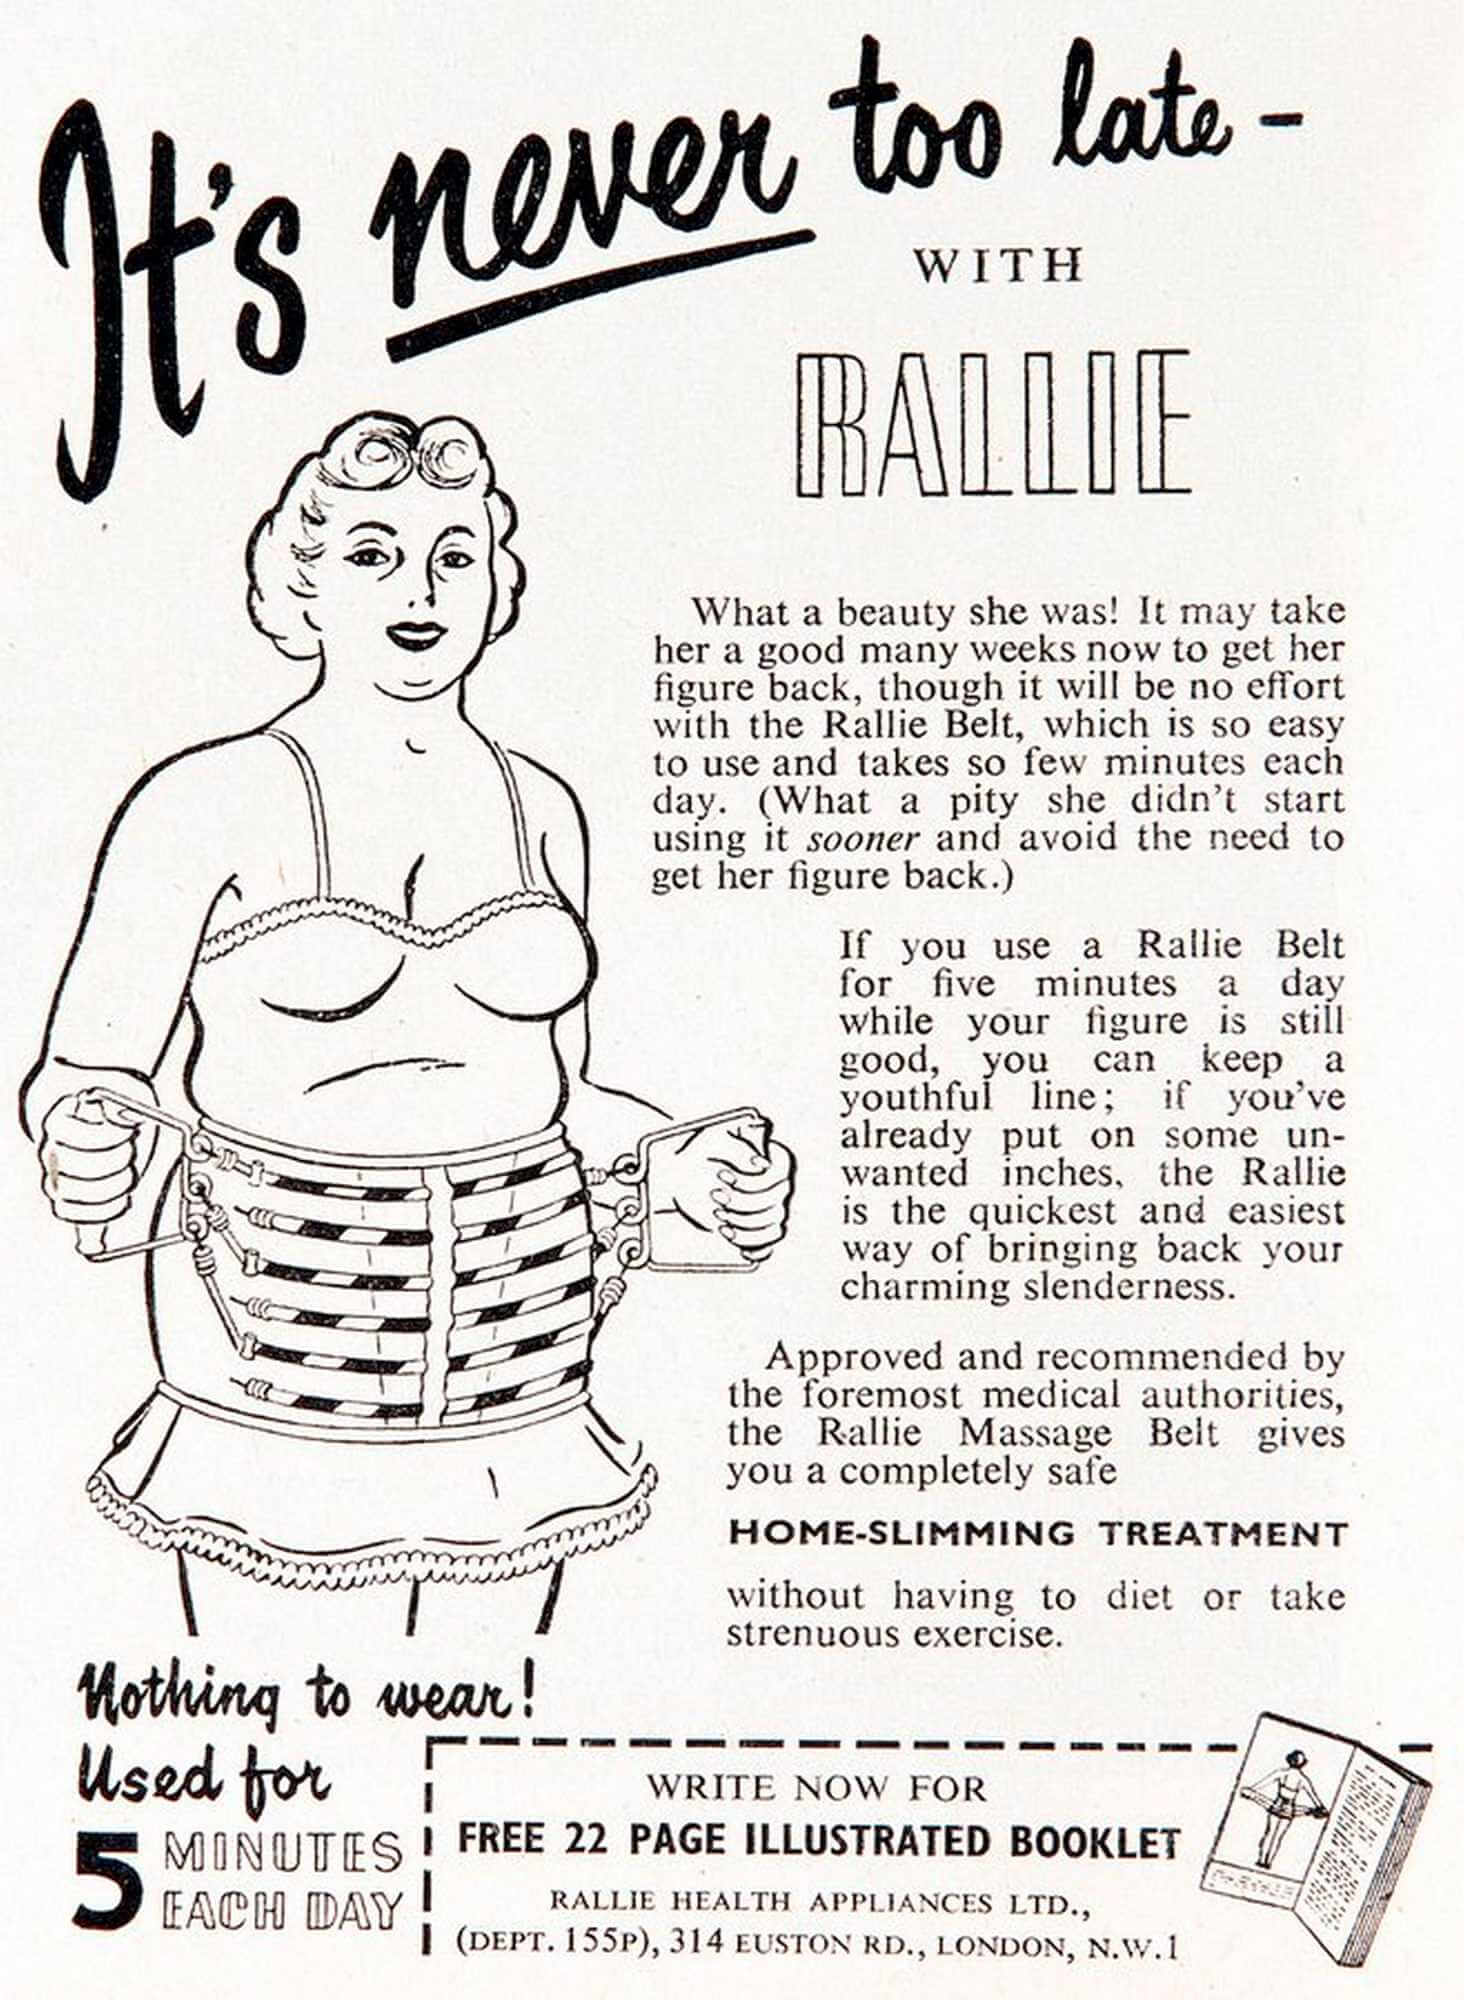 Rallie Health Appliances waist slimming exercise belt - 1950's